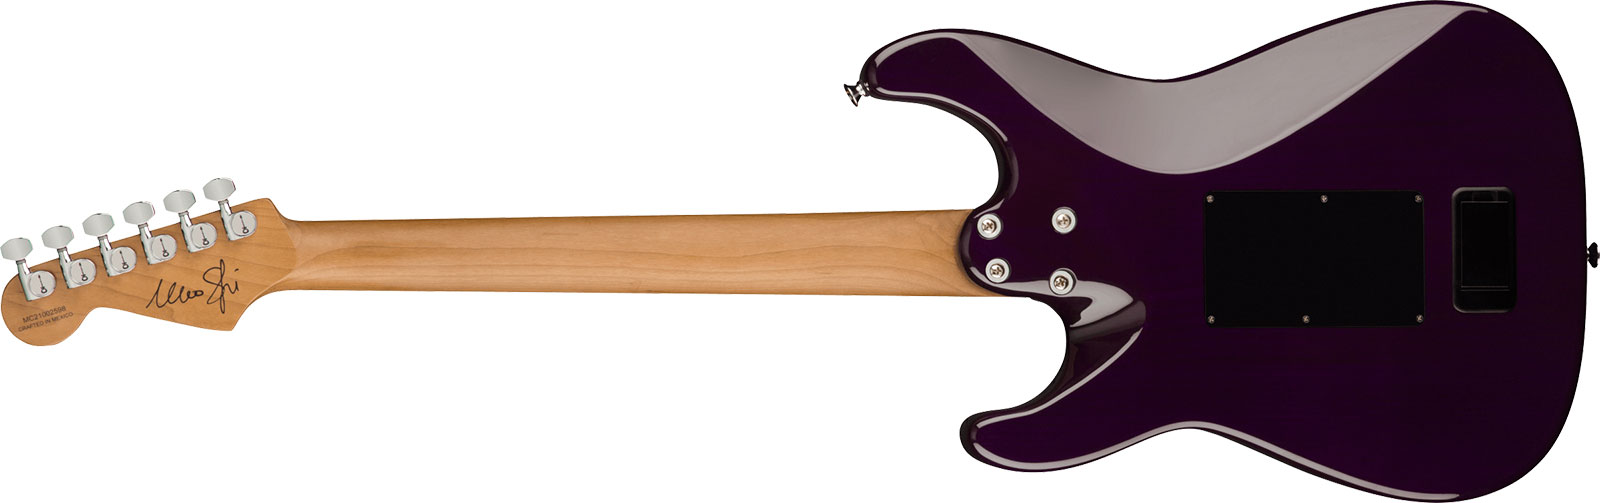 Charvel Marco Sfogli So Cal Style 1 Pro Mod Signature Hss Emg Fr Mn - Transparent Purple Burst - Kenmerkende elektrische gitaar - Variation 1